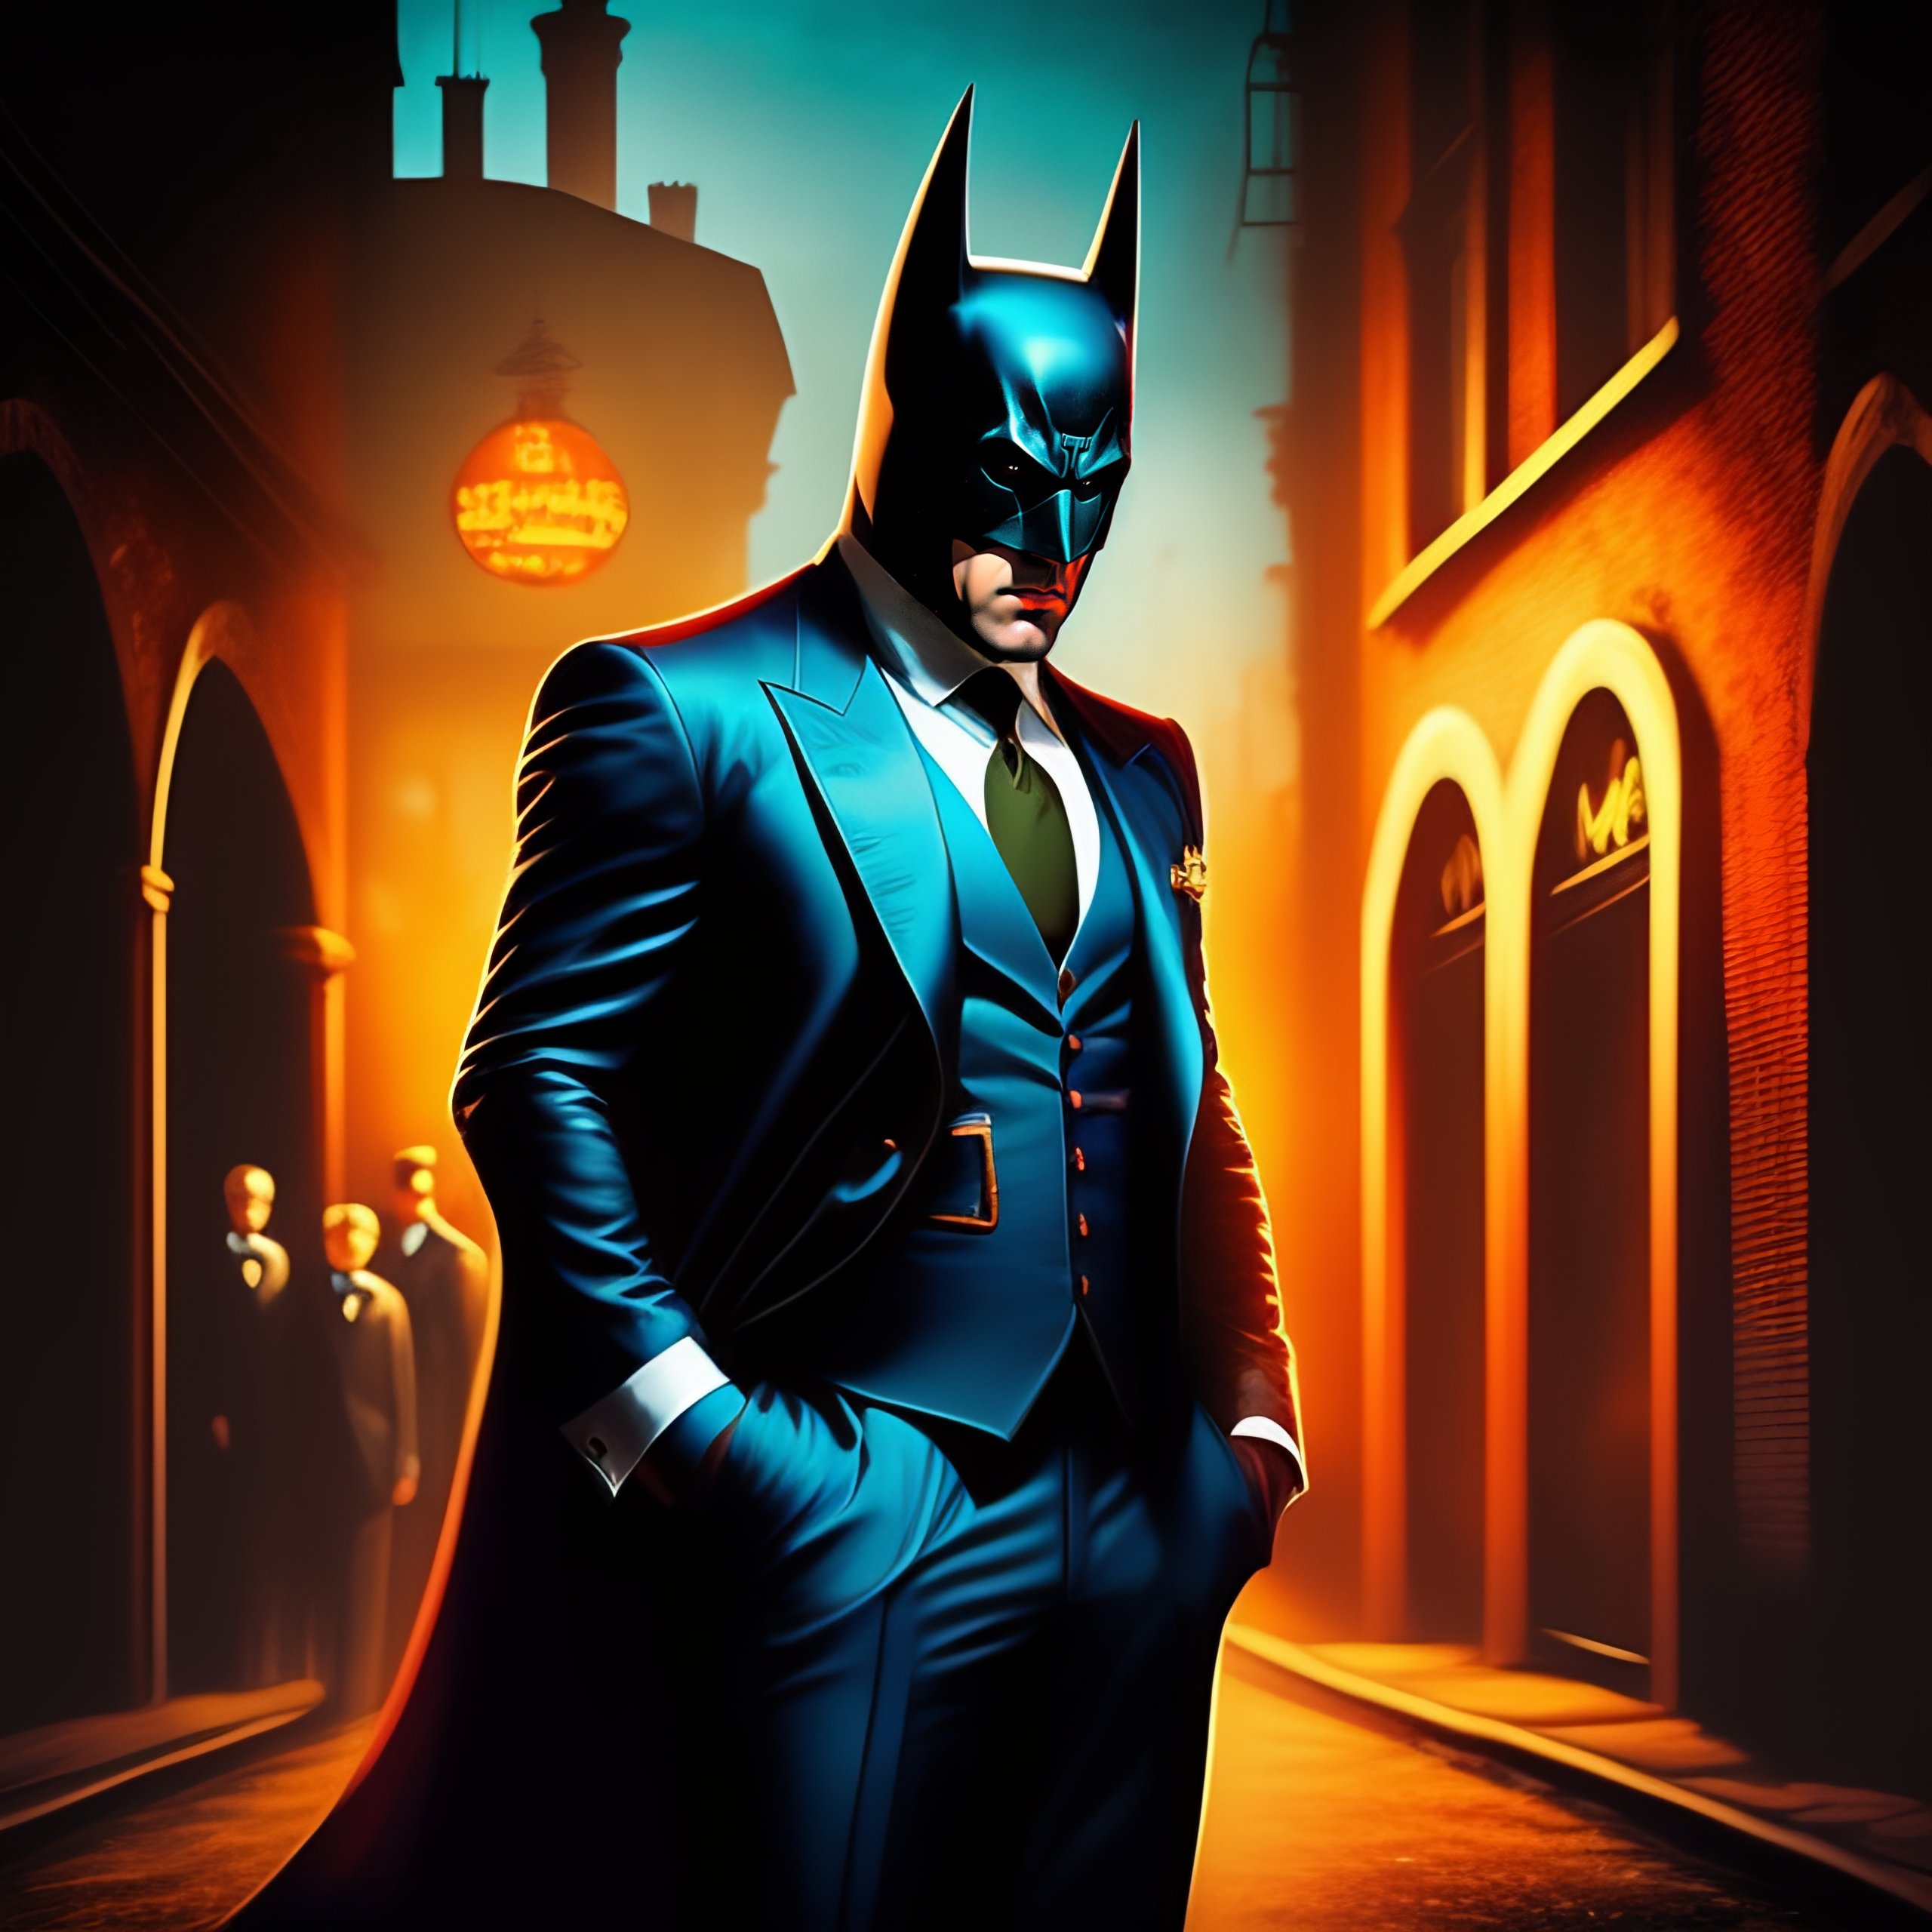 Lexica - Batman inside a vintage alley in 1920s london,black batman suit,mafia  boss,haze,surrounded by mob,marvel art style,digital art,teal and oran...